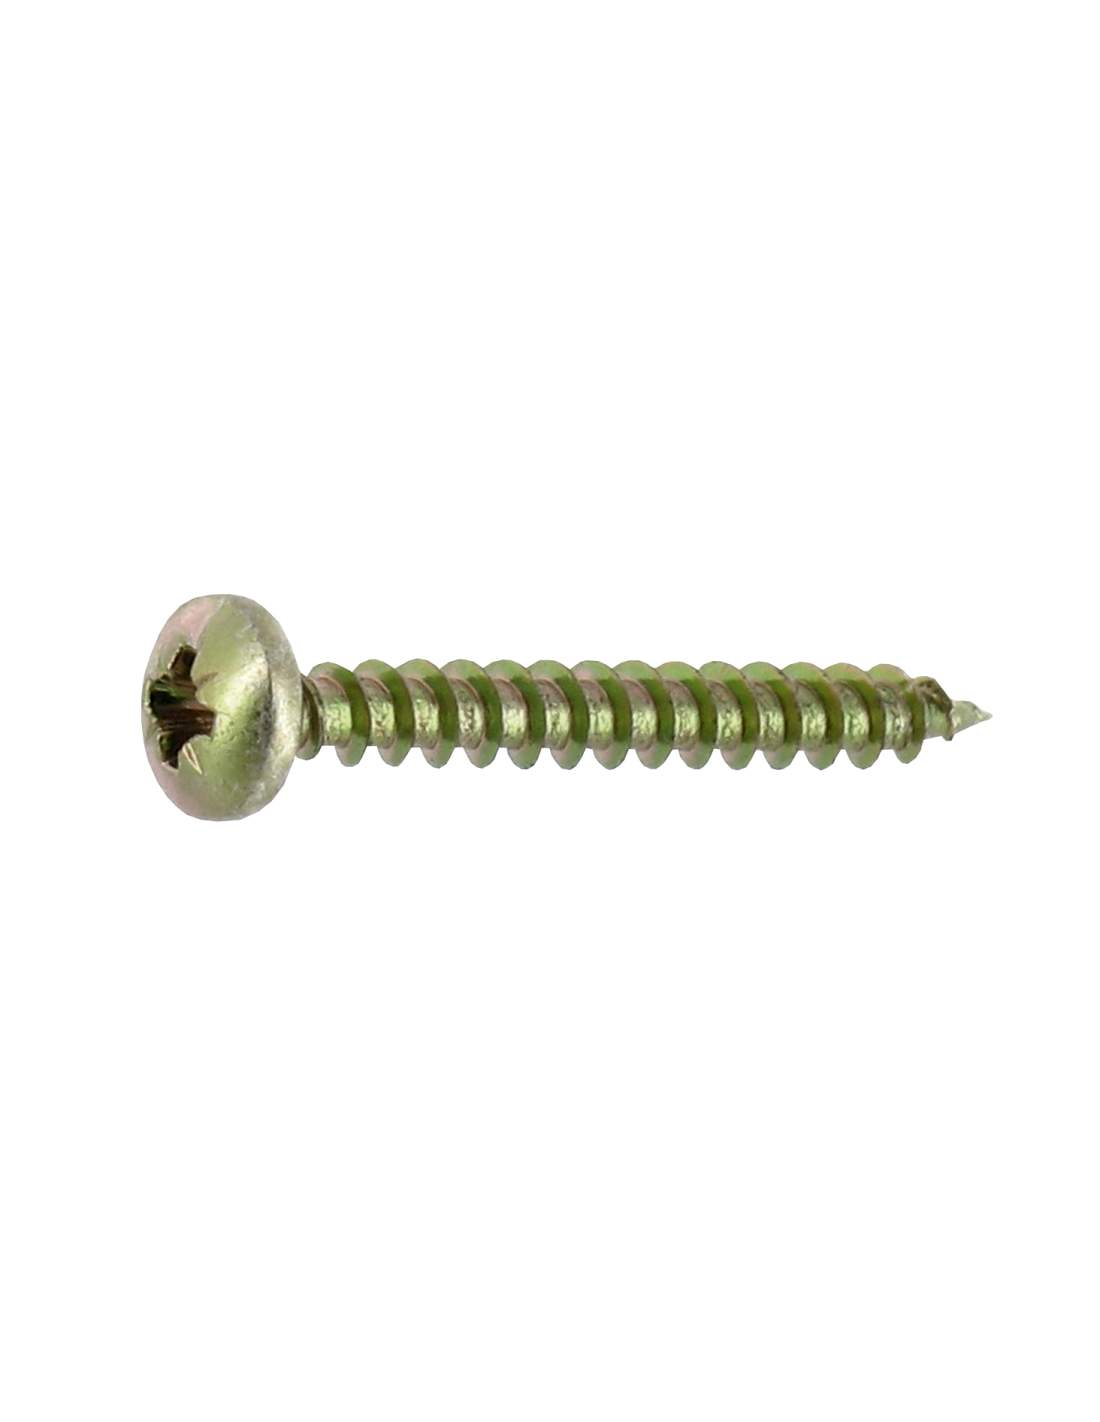 Pozidriv round-head agglomerated screws ABI 4x12, 32 pcs.